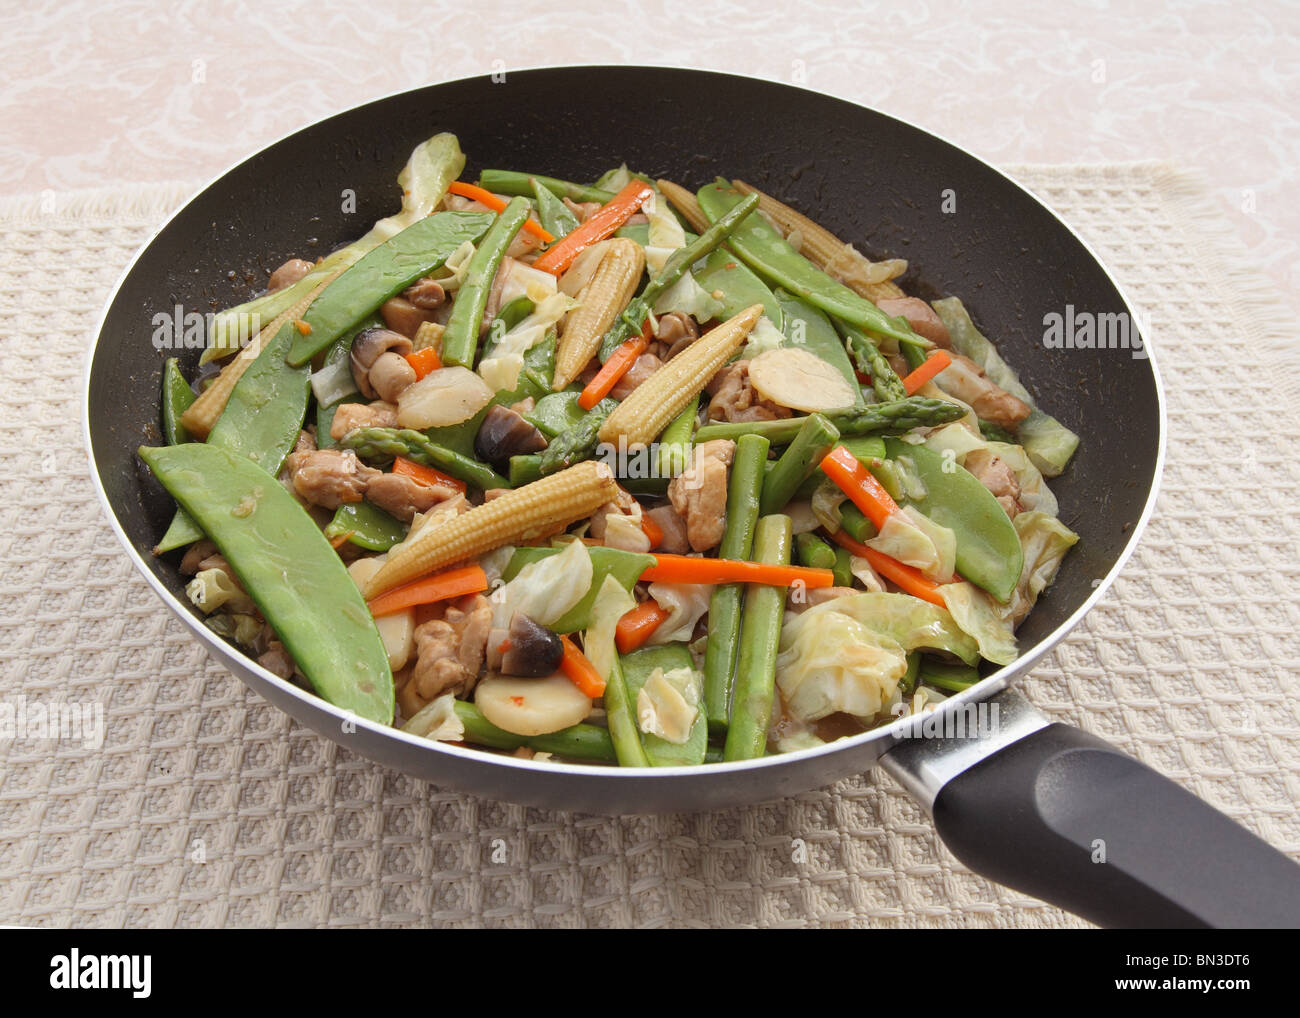 wok pan full of chicken vegetable stir-fry Stock Photo